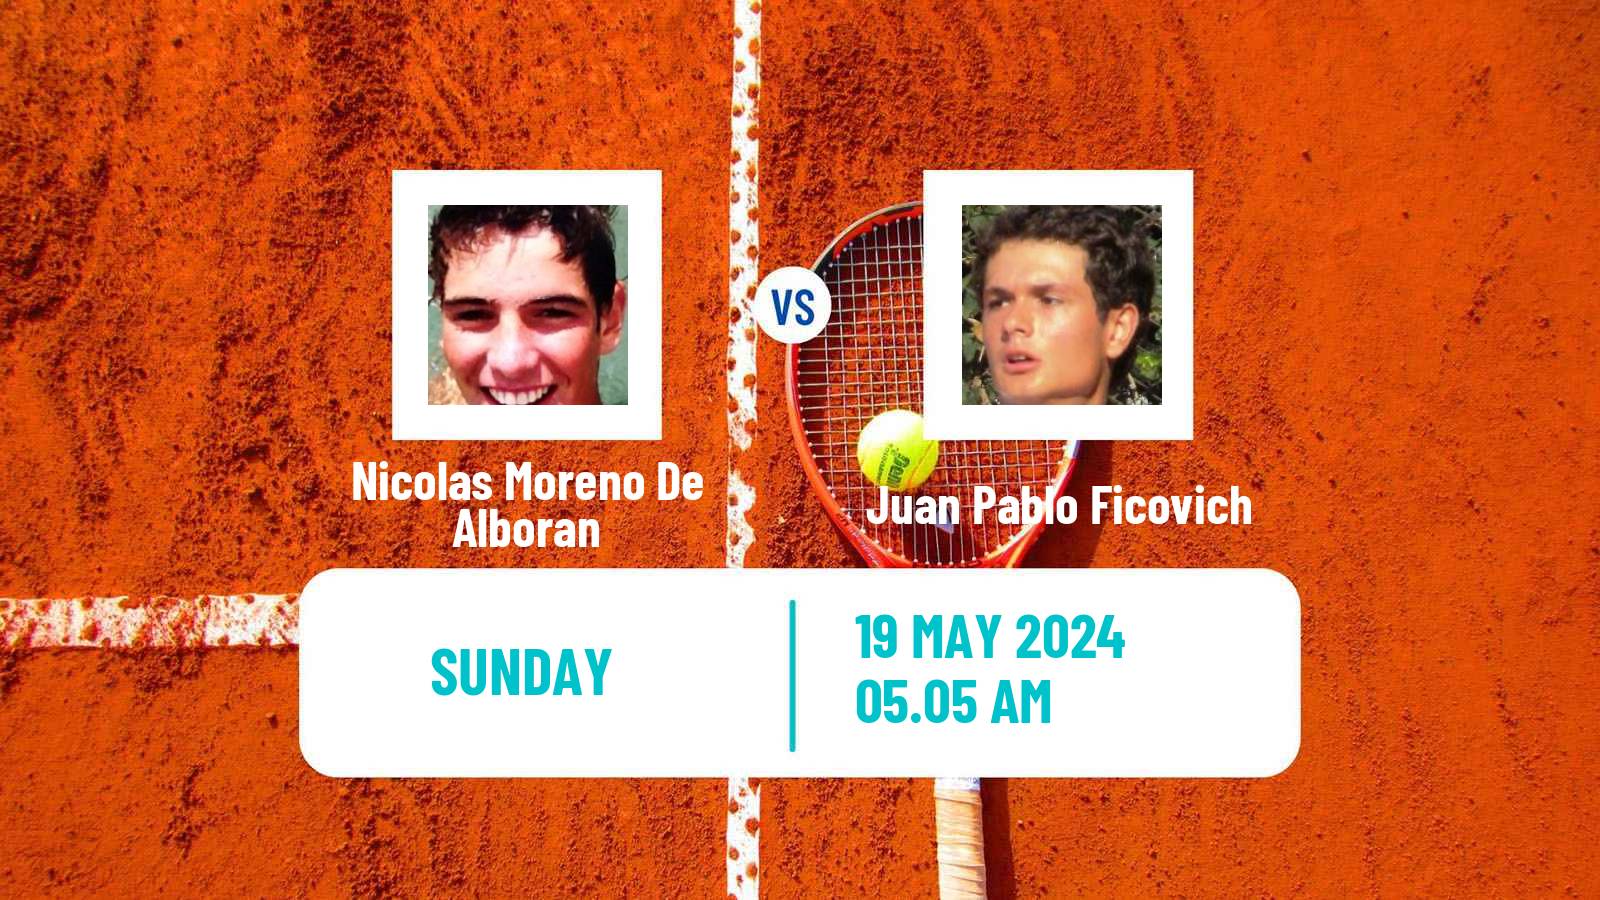 Tennis ATP Geneva Nicolas Moreno De Alboran - Juan Pablo Ficovich